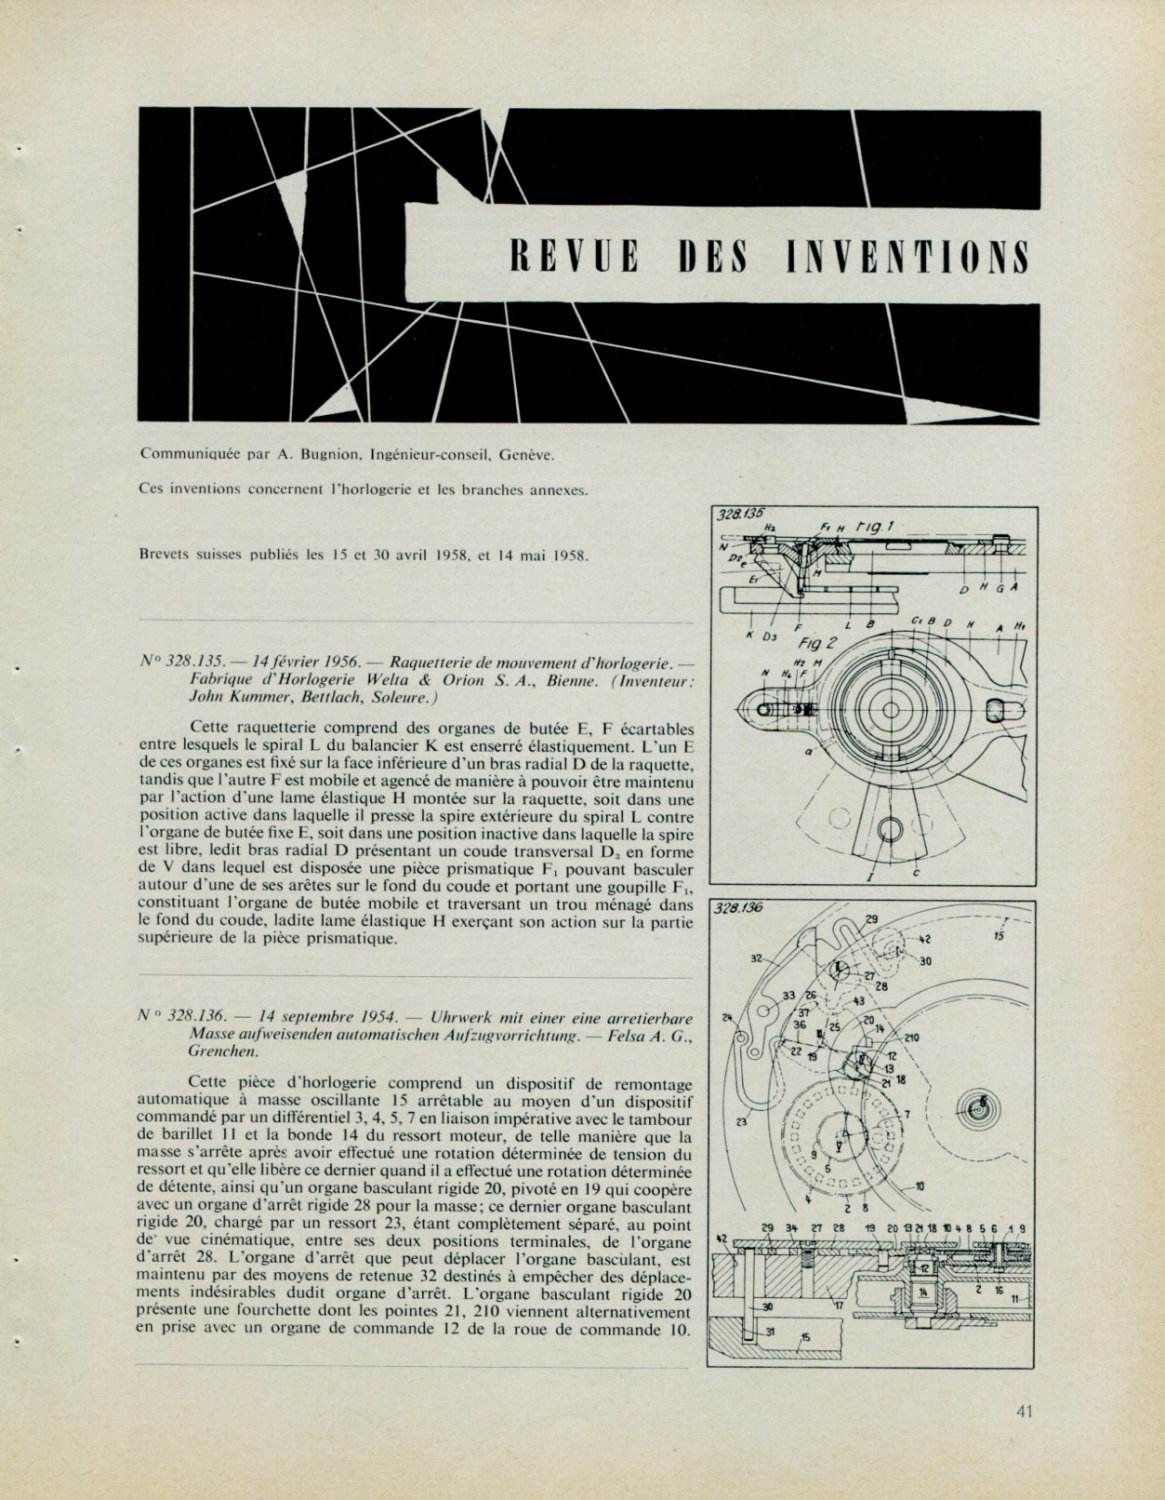 1958 Horology Patents Inventions Brevets Horlogerie 1958 Swiss Magazine Article Suisse Switzerland